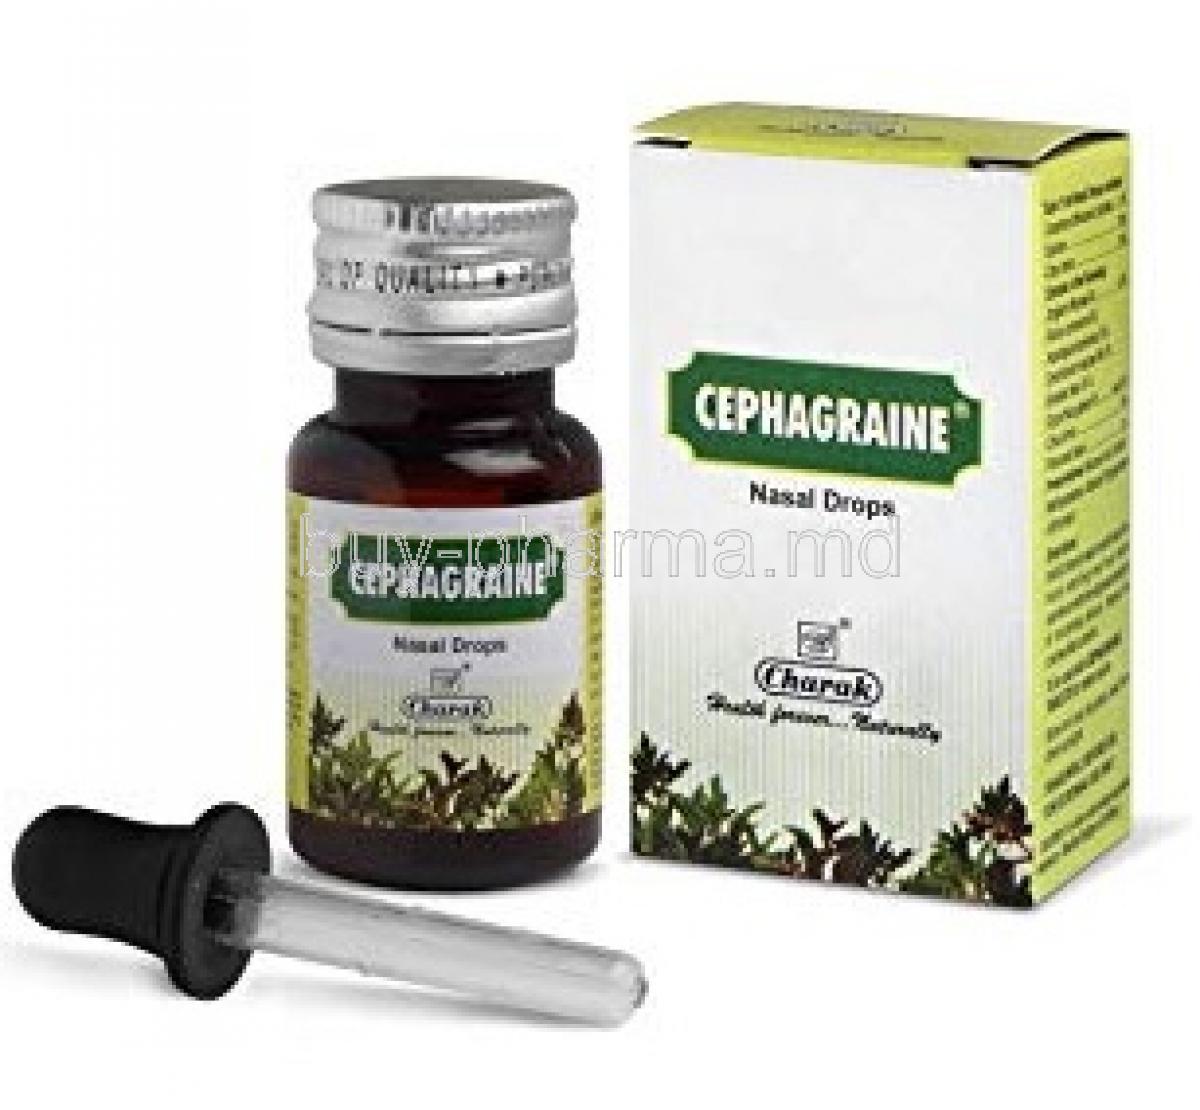 Cephagraine Nasal Drop box and bottle